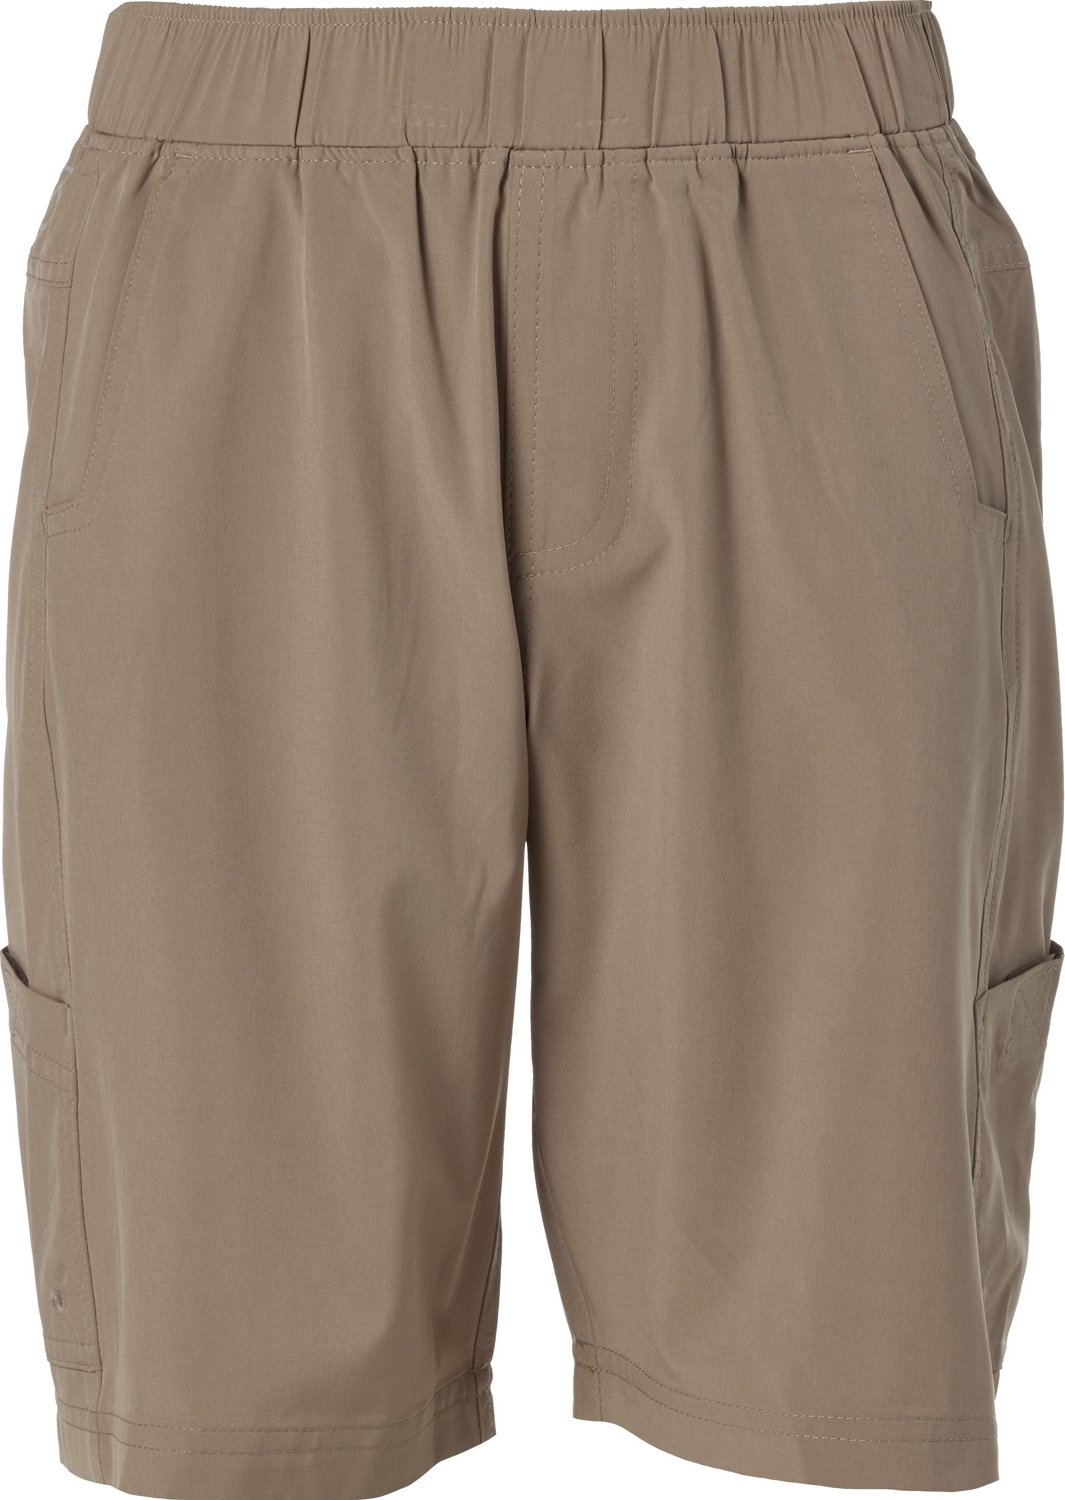 Magellan Athletic Casual Shorts for Men